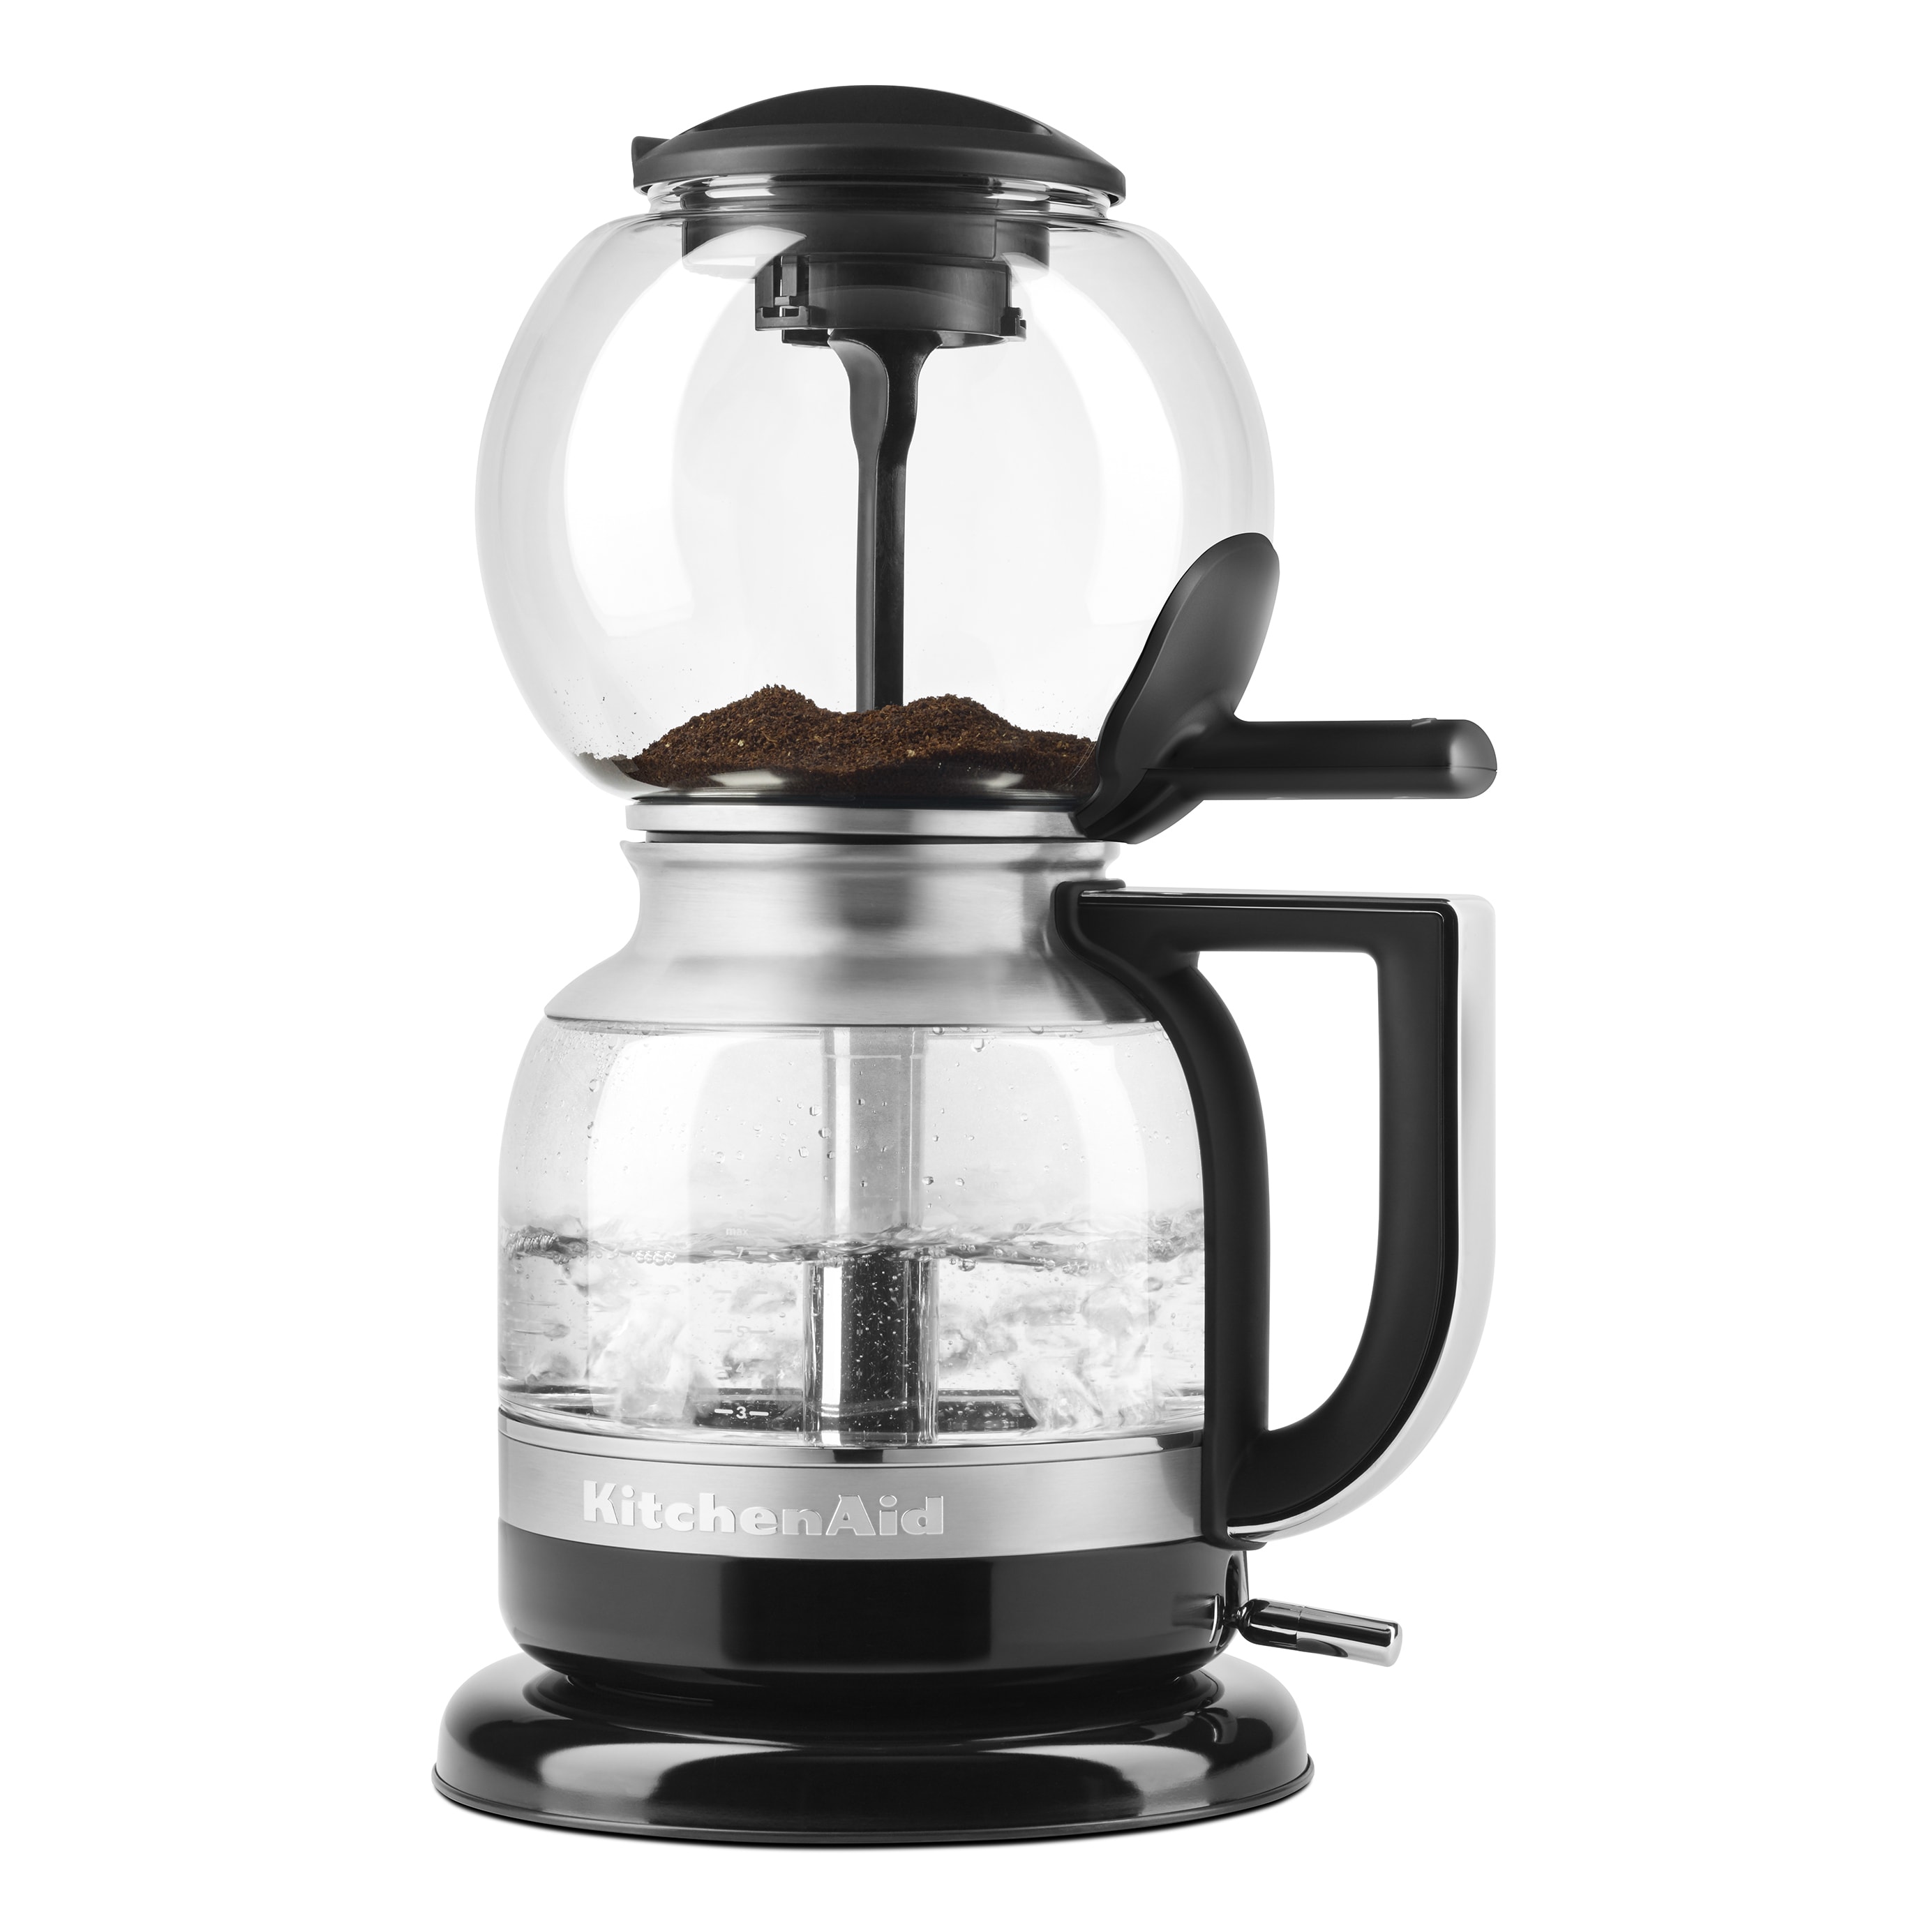 https://ak1.ostkcdn.com/images/products/12753451/KitchenAid-KCM0812OB-Onyx-Black-8-Cup-Siphon-Coffee-Brewer-8d88b249-2f53-4b87-81df-983b9417e775.jpg